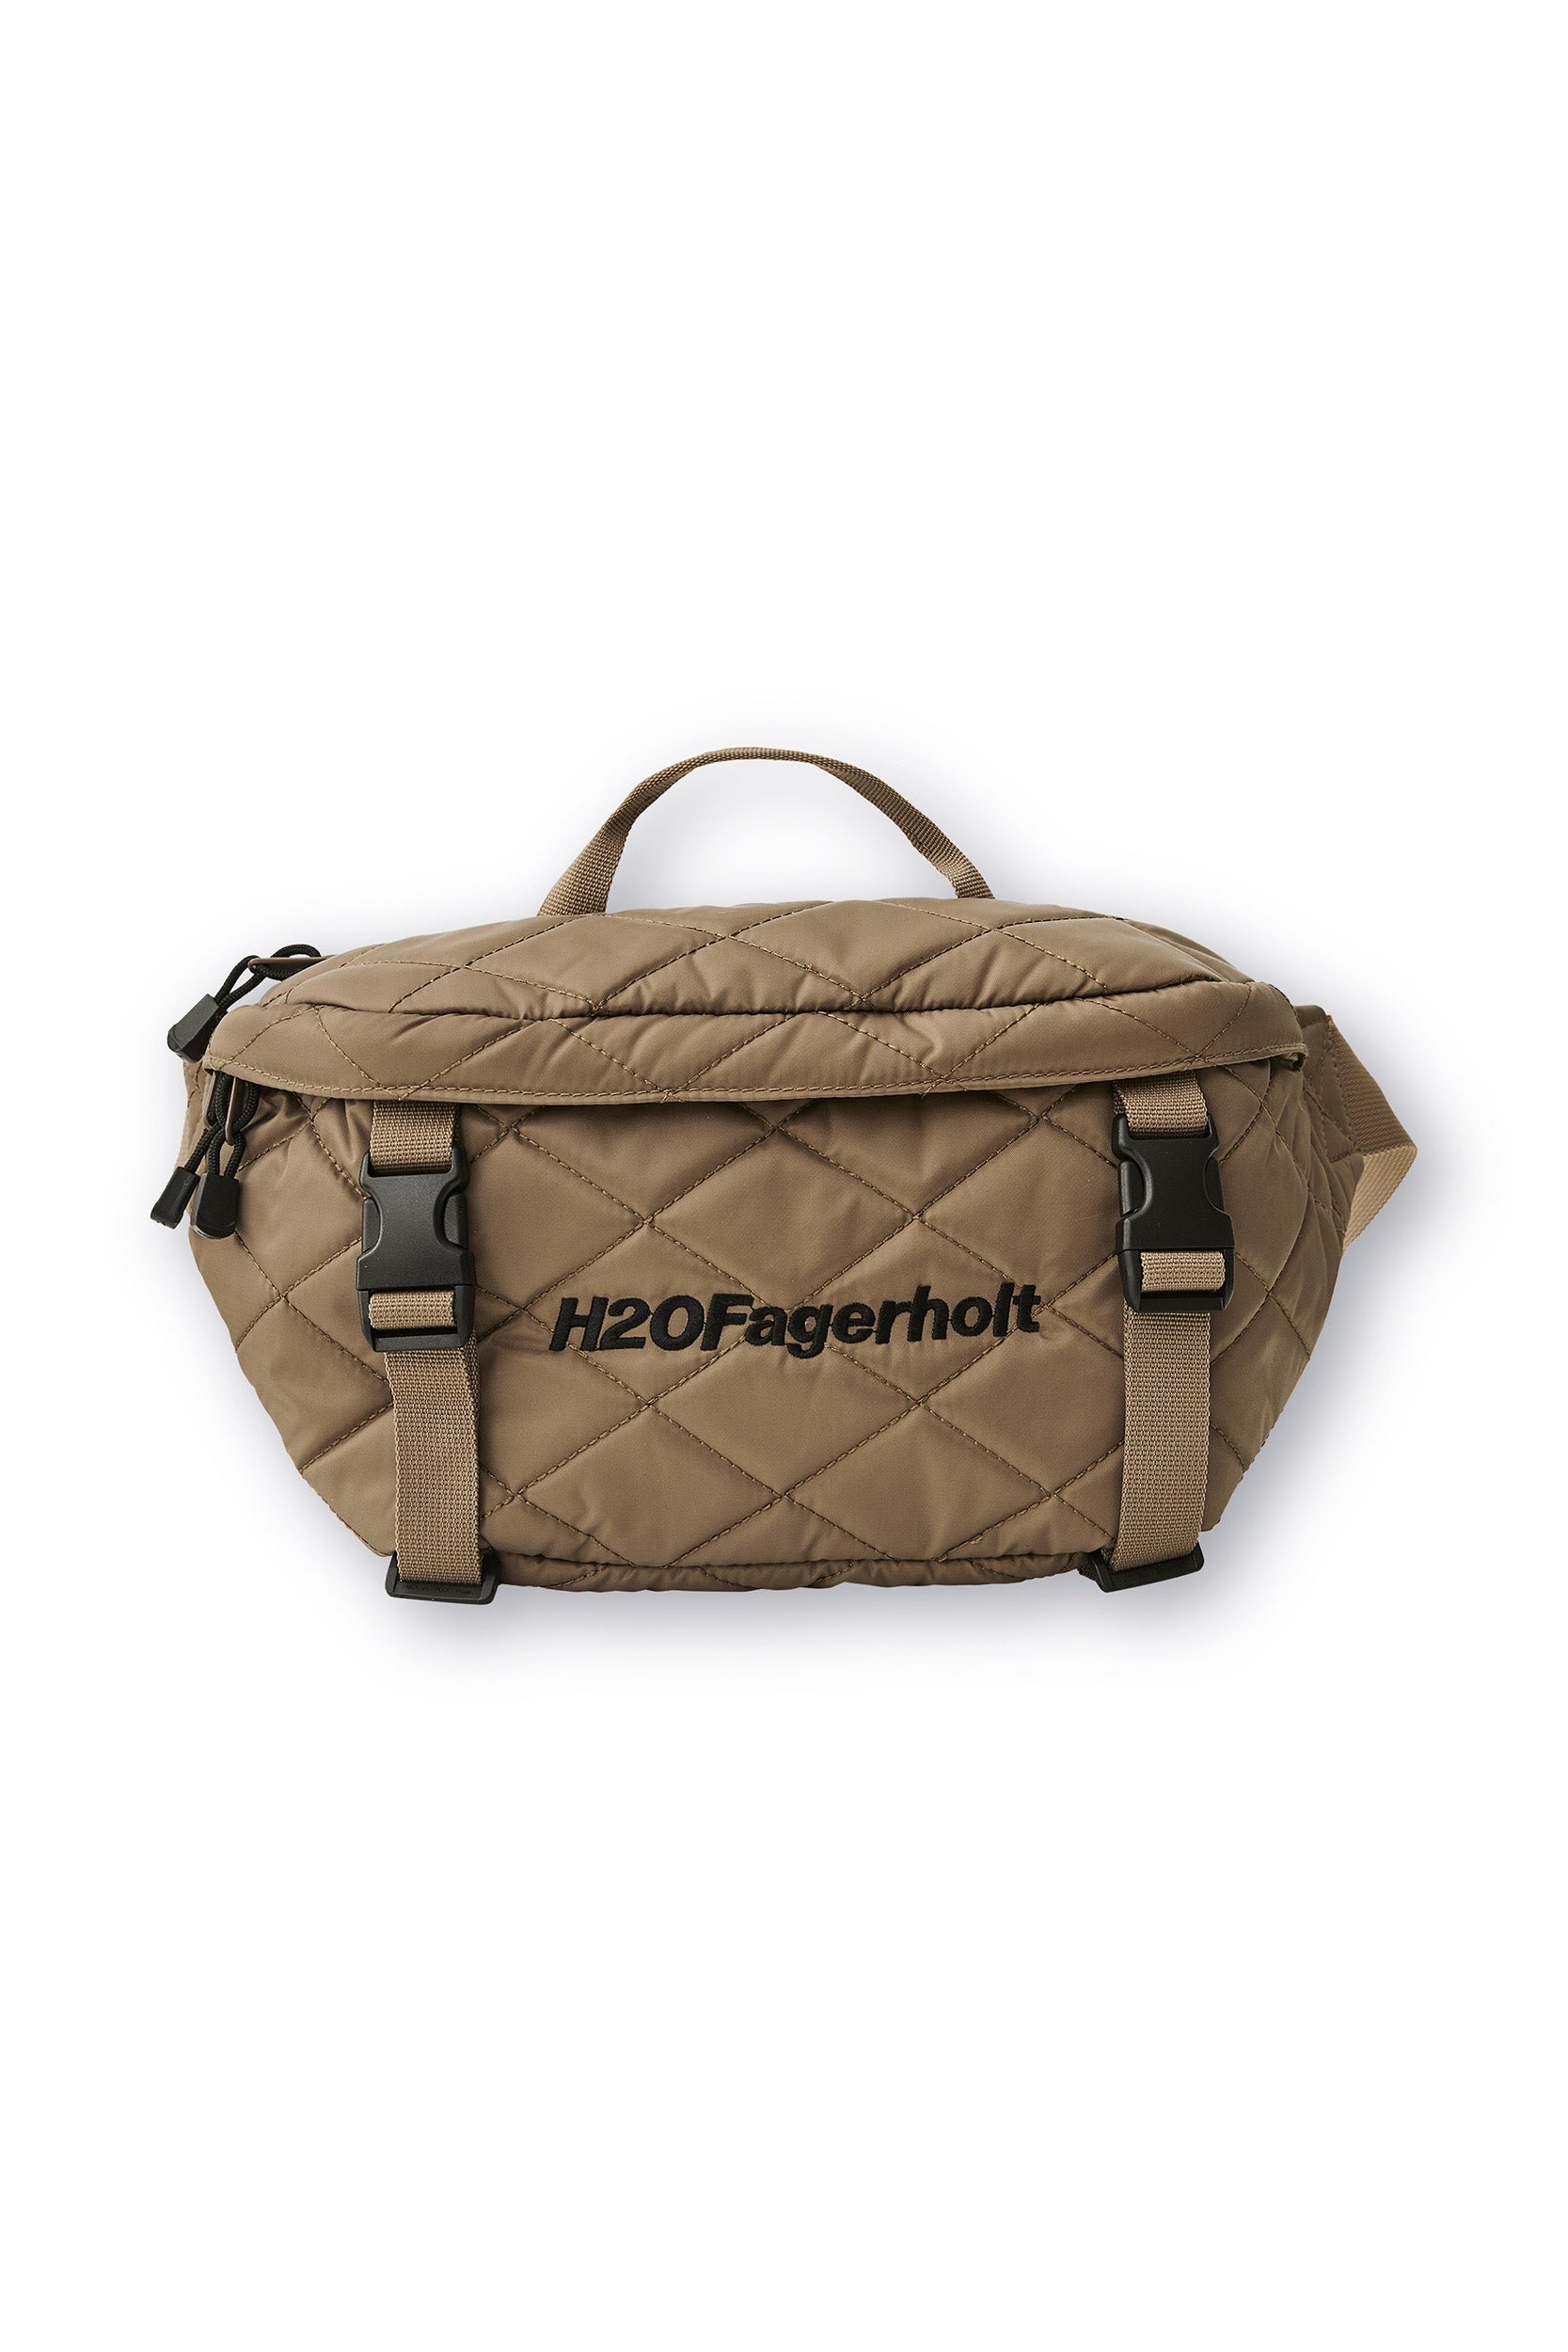 H2OFagerholt Close Market Bag Bag 3562 Khaki